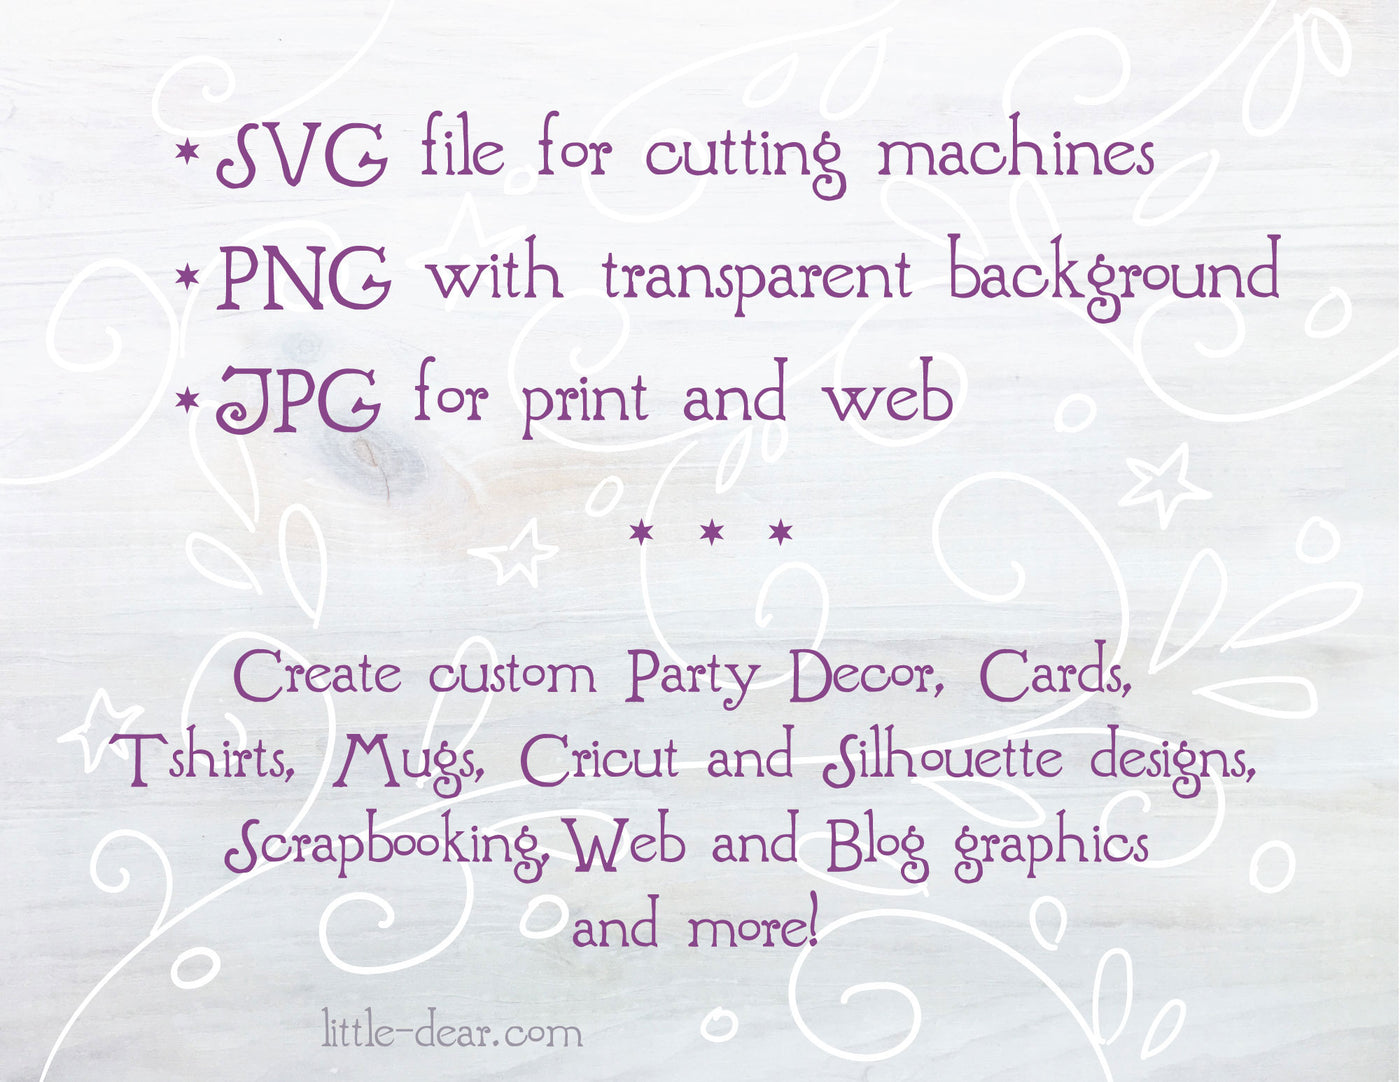 SVG walking Cat cut file for Cricut, Silhouette, PNG, JPG